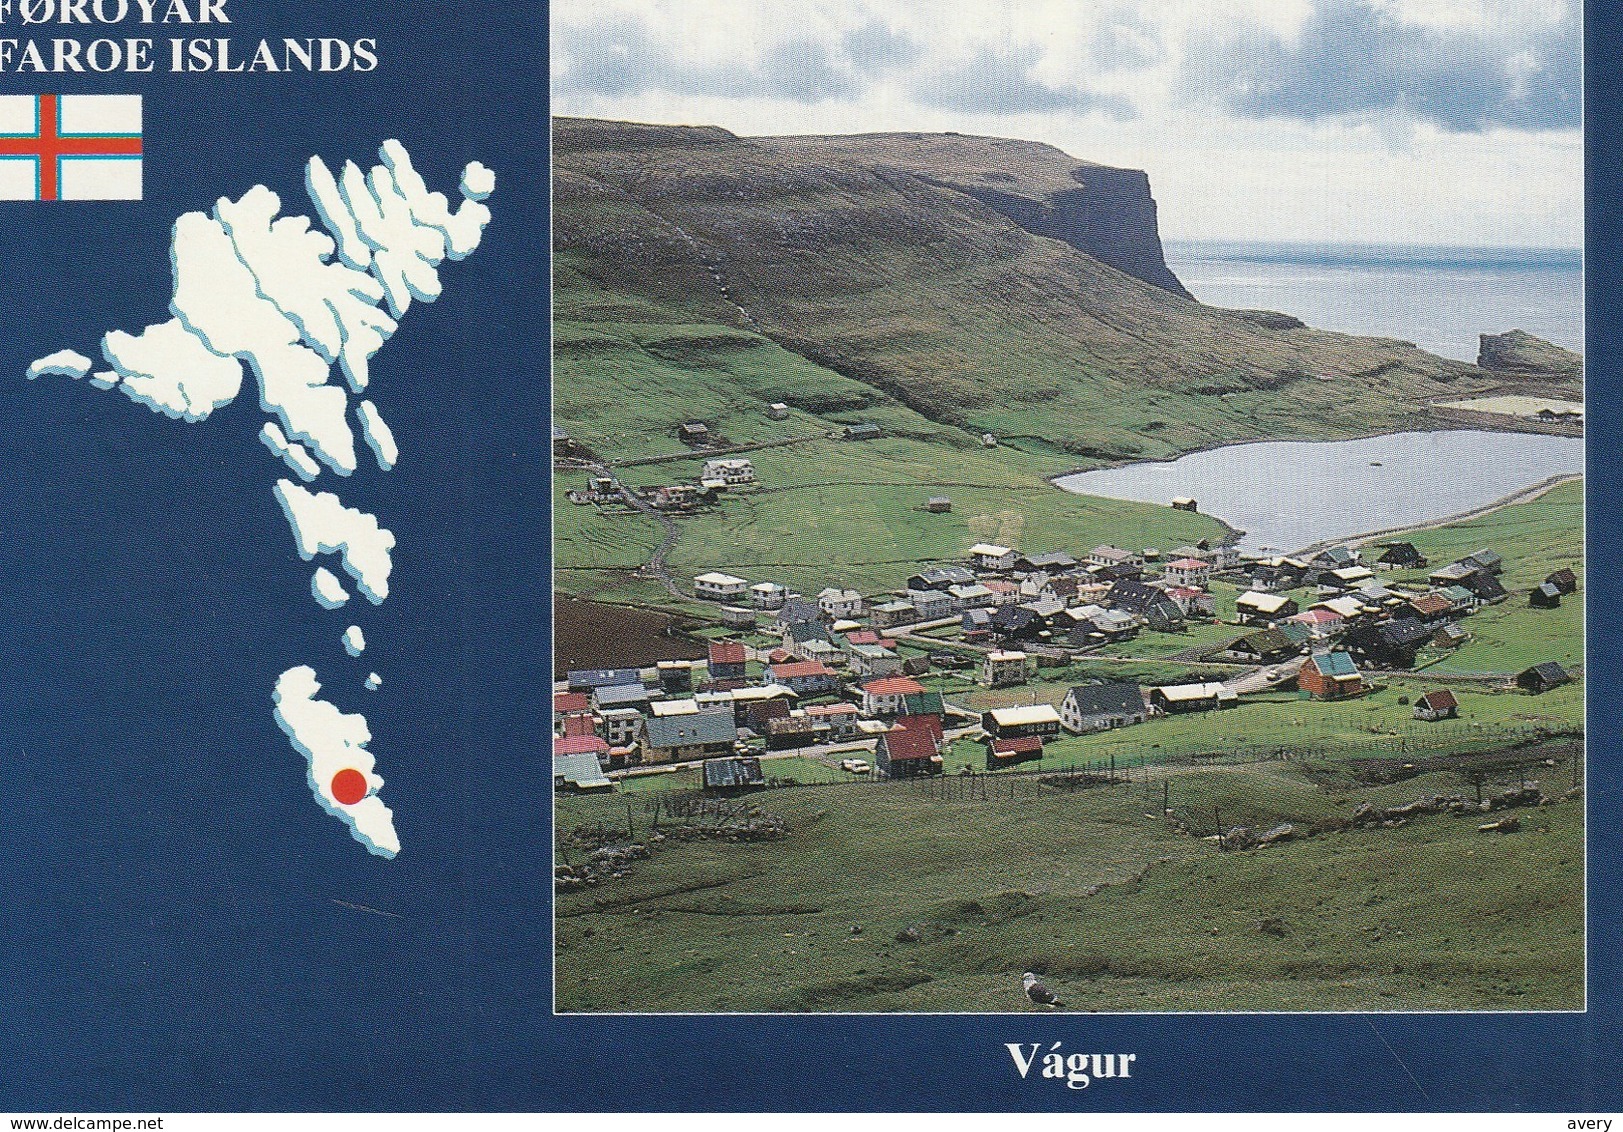 Foroyar Faroe Islands Vagur - Faroe Islands